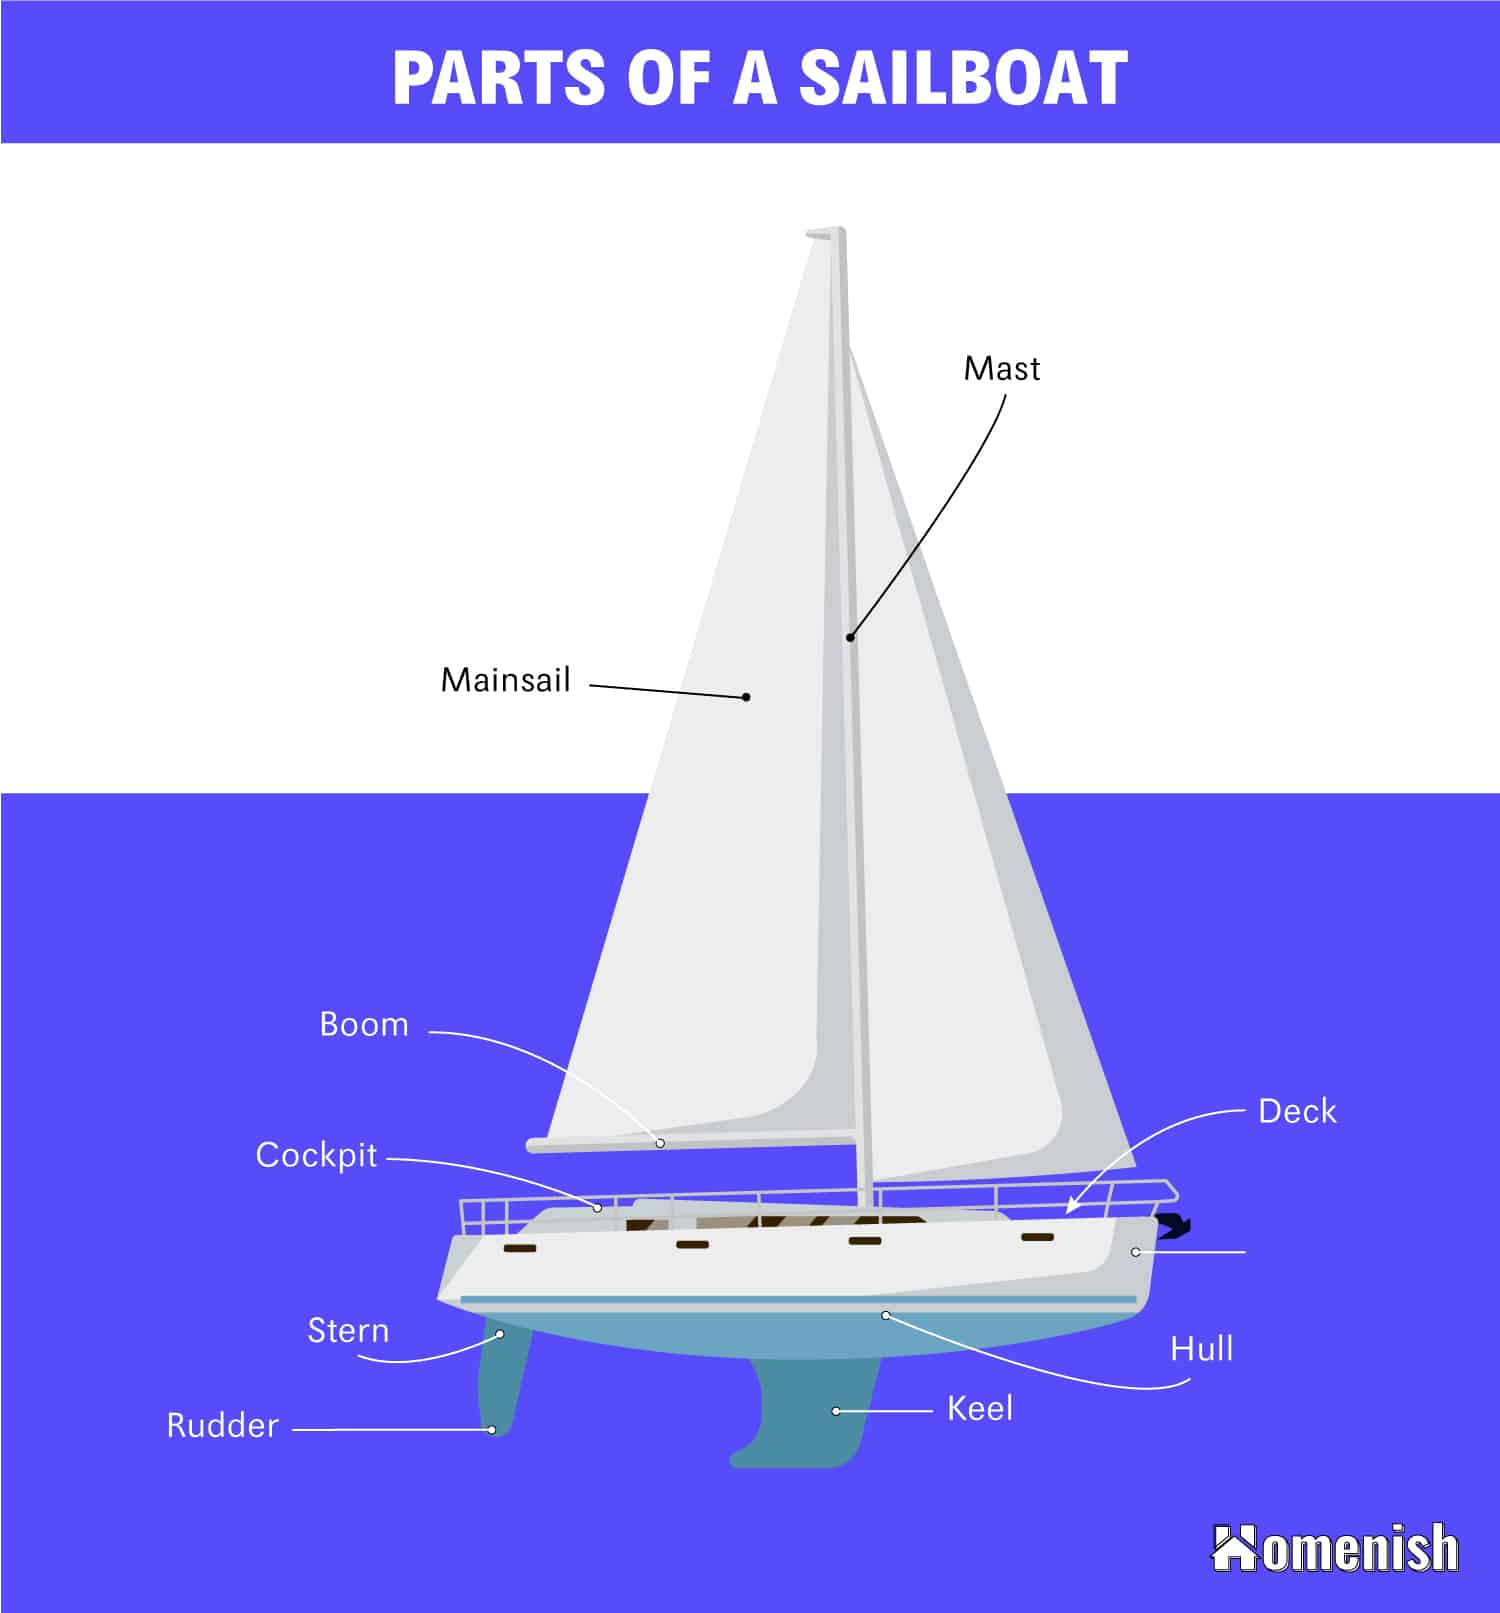 Parts of a Sailboat